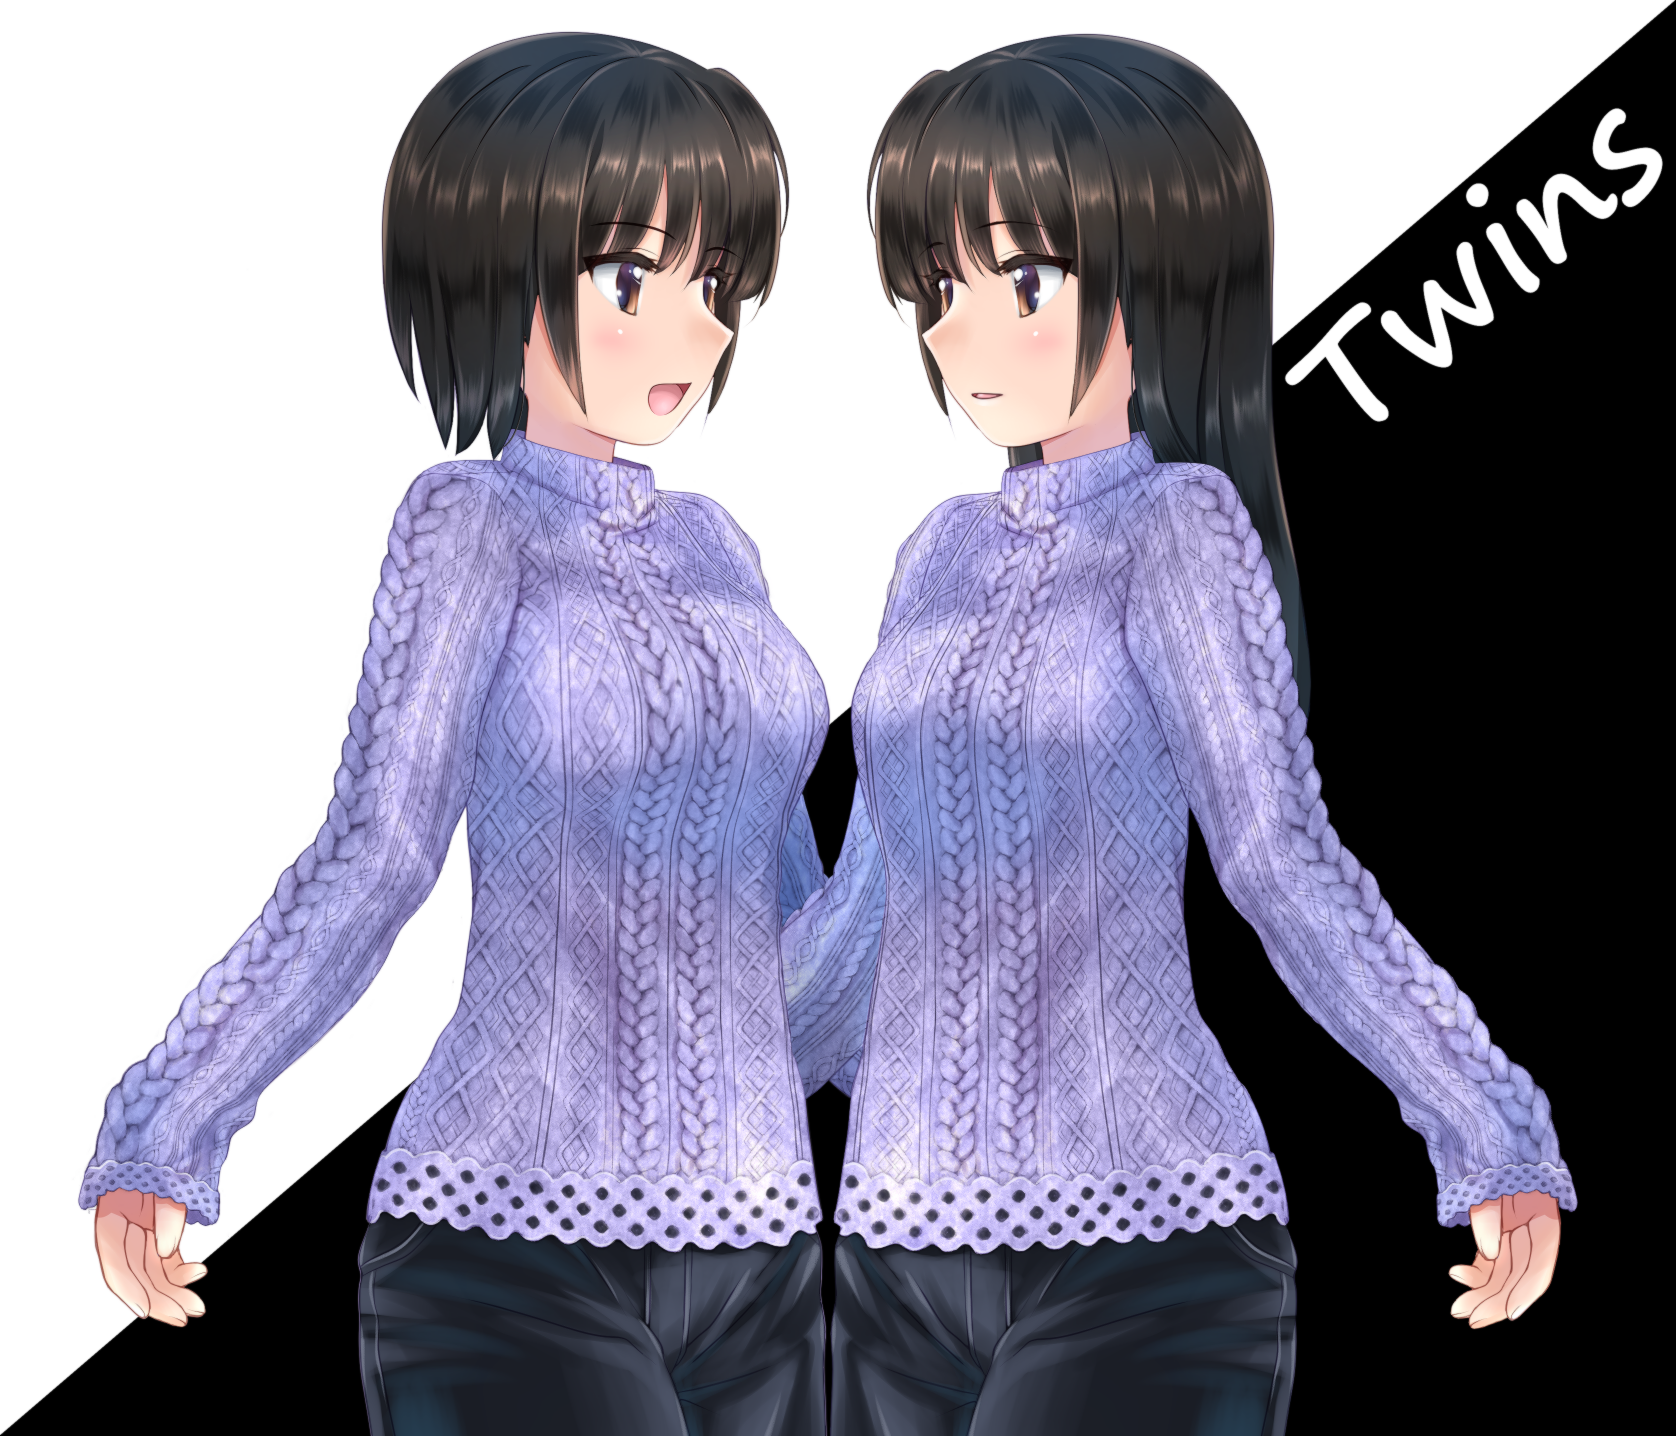 Anime 1676x1436 anime anime girls original characters twins artwork digital art fan art two women